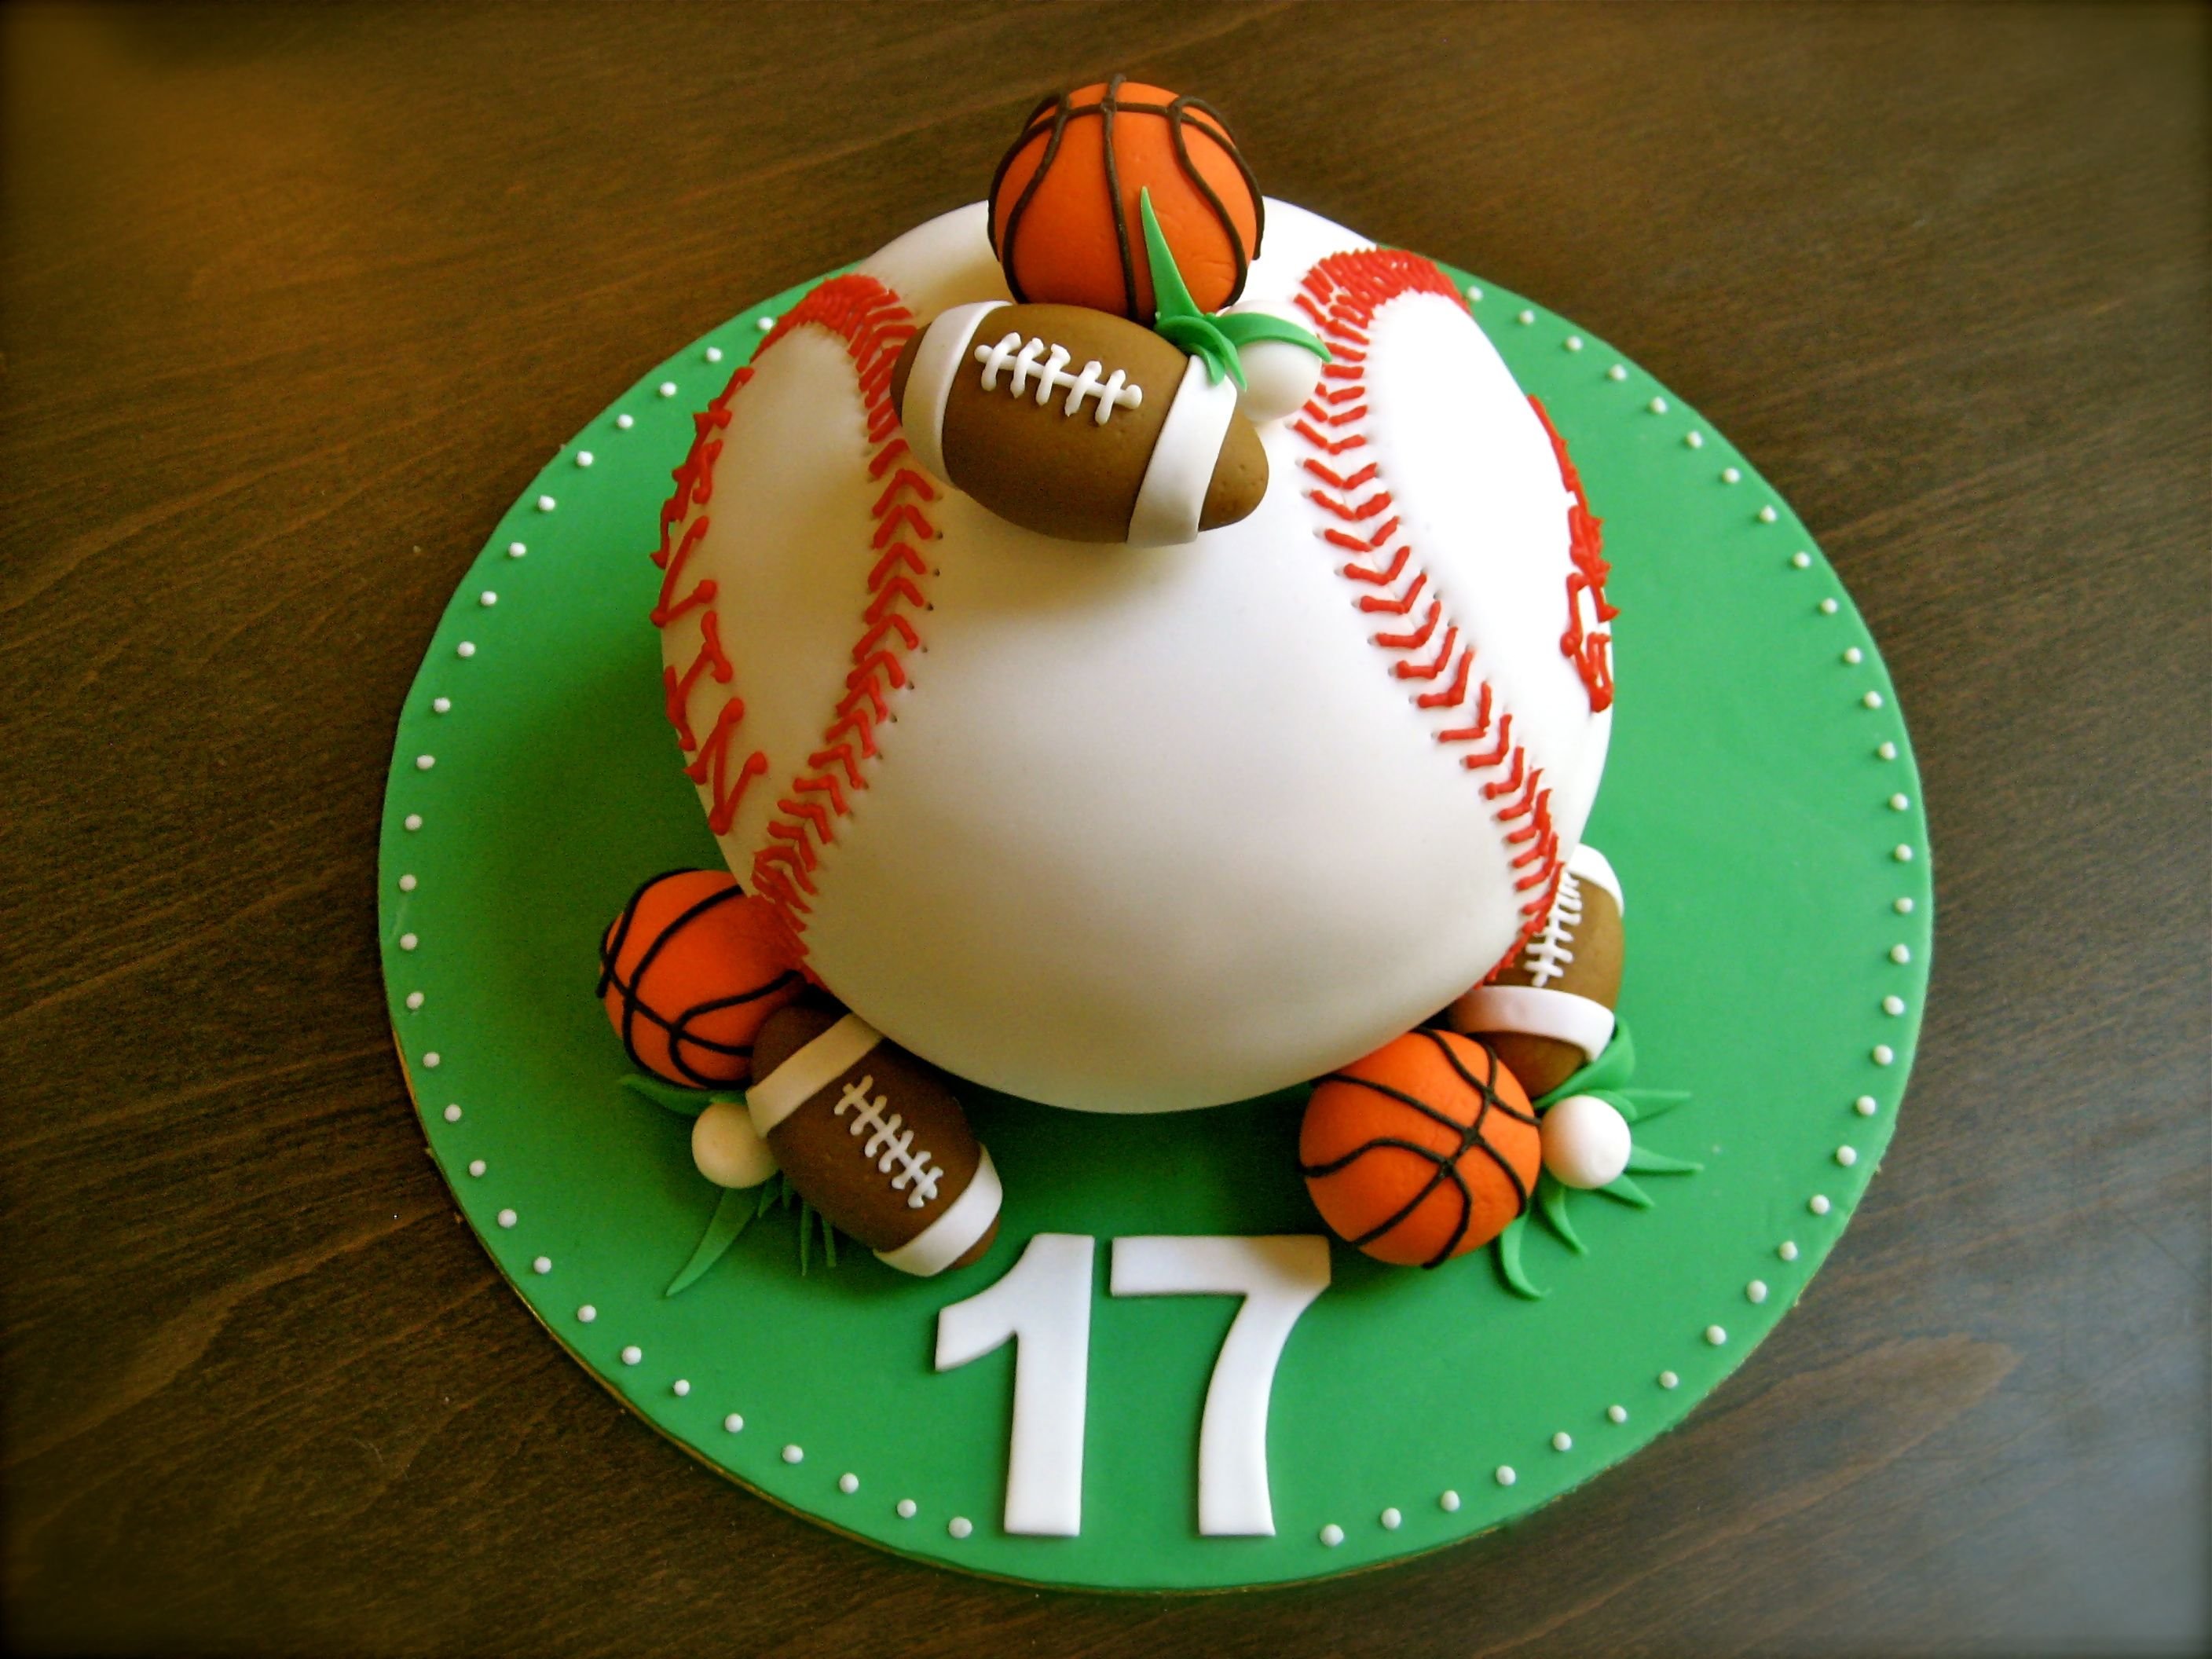 Торт для мальчика мяч. Торт спортивный. Торт на спортивную тематику. Поделки на спортивную тему. Спортивный торт для мальчика.